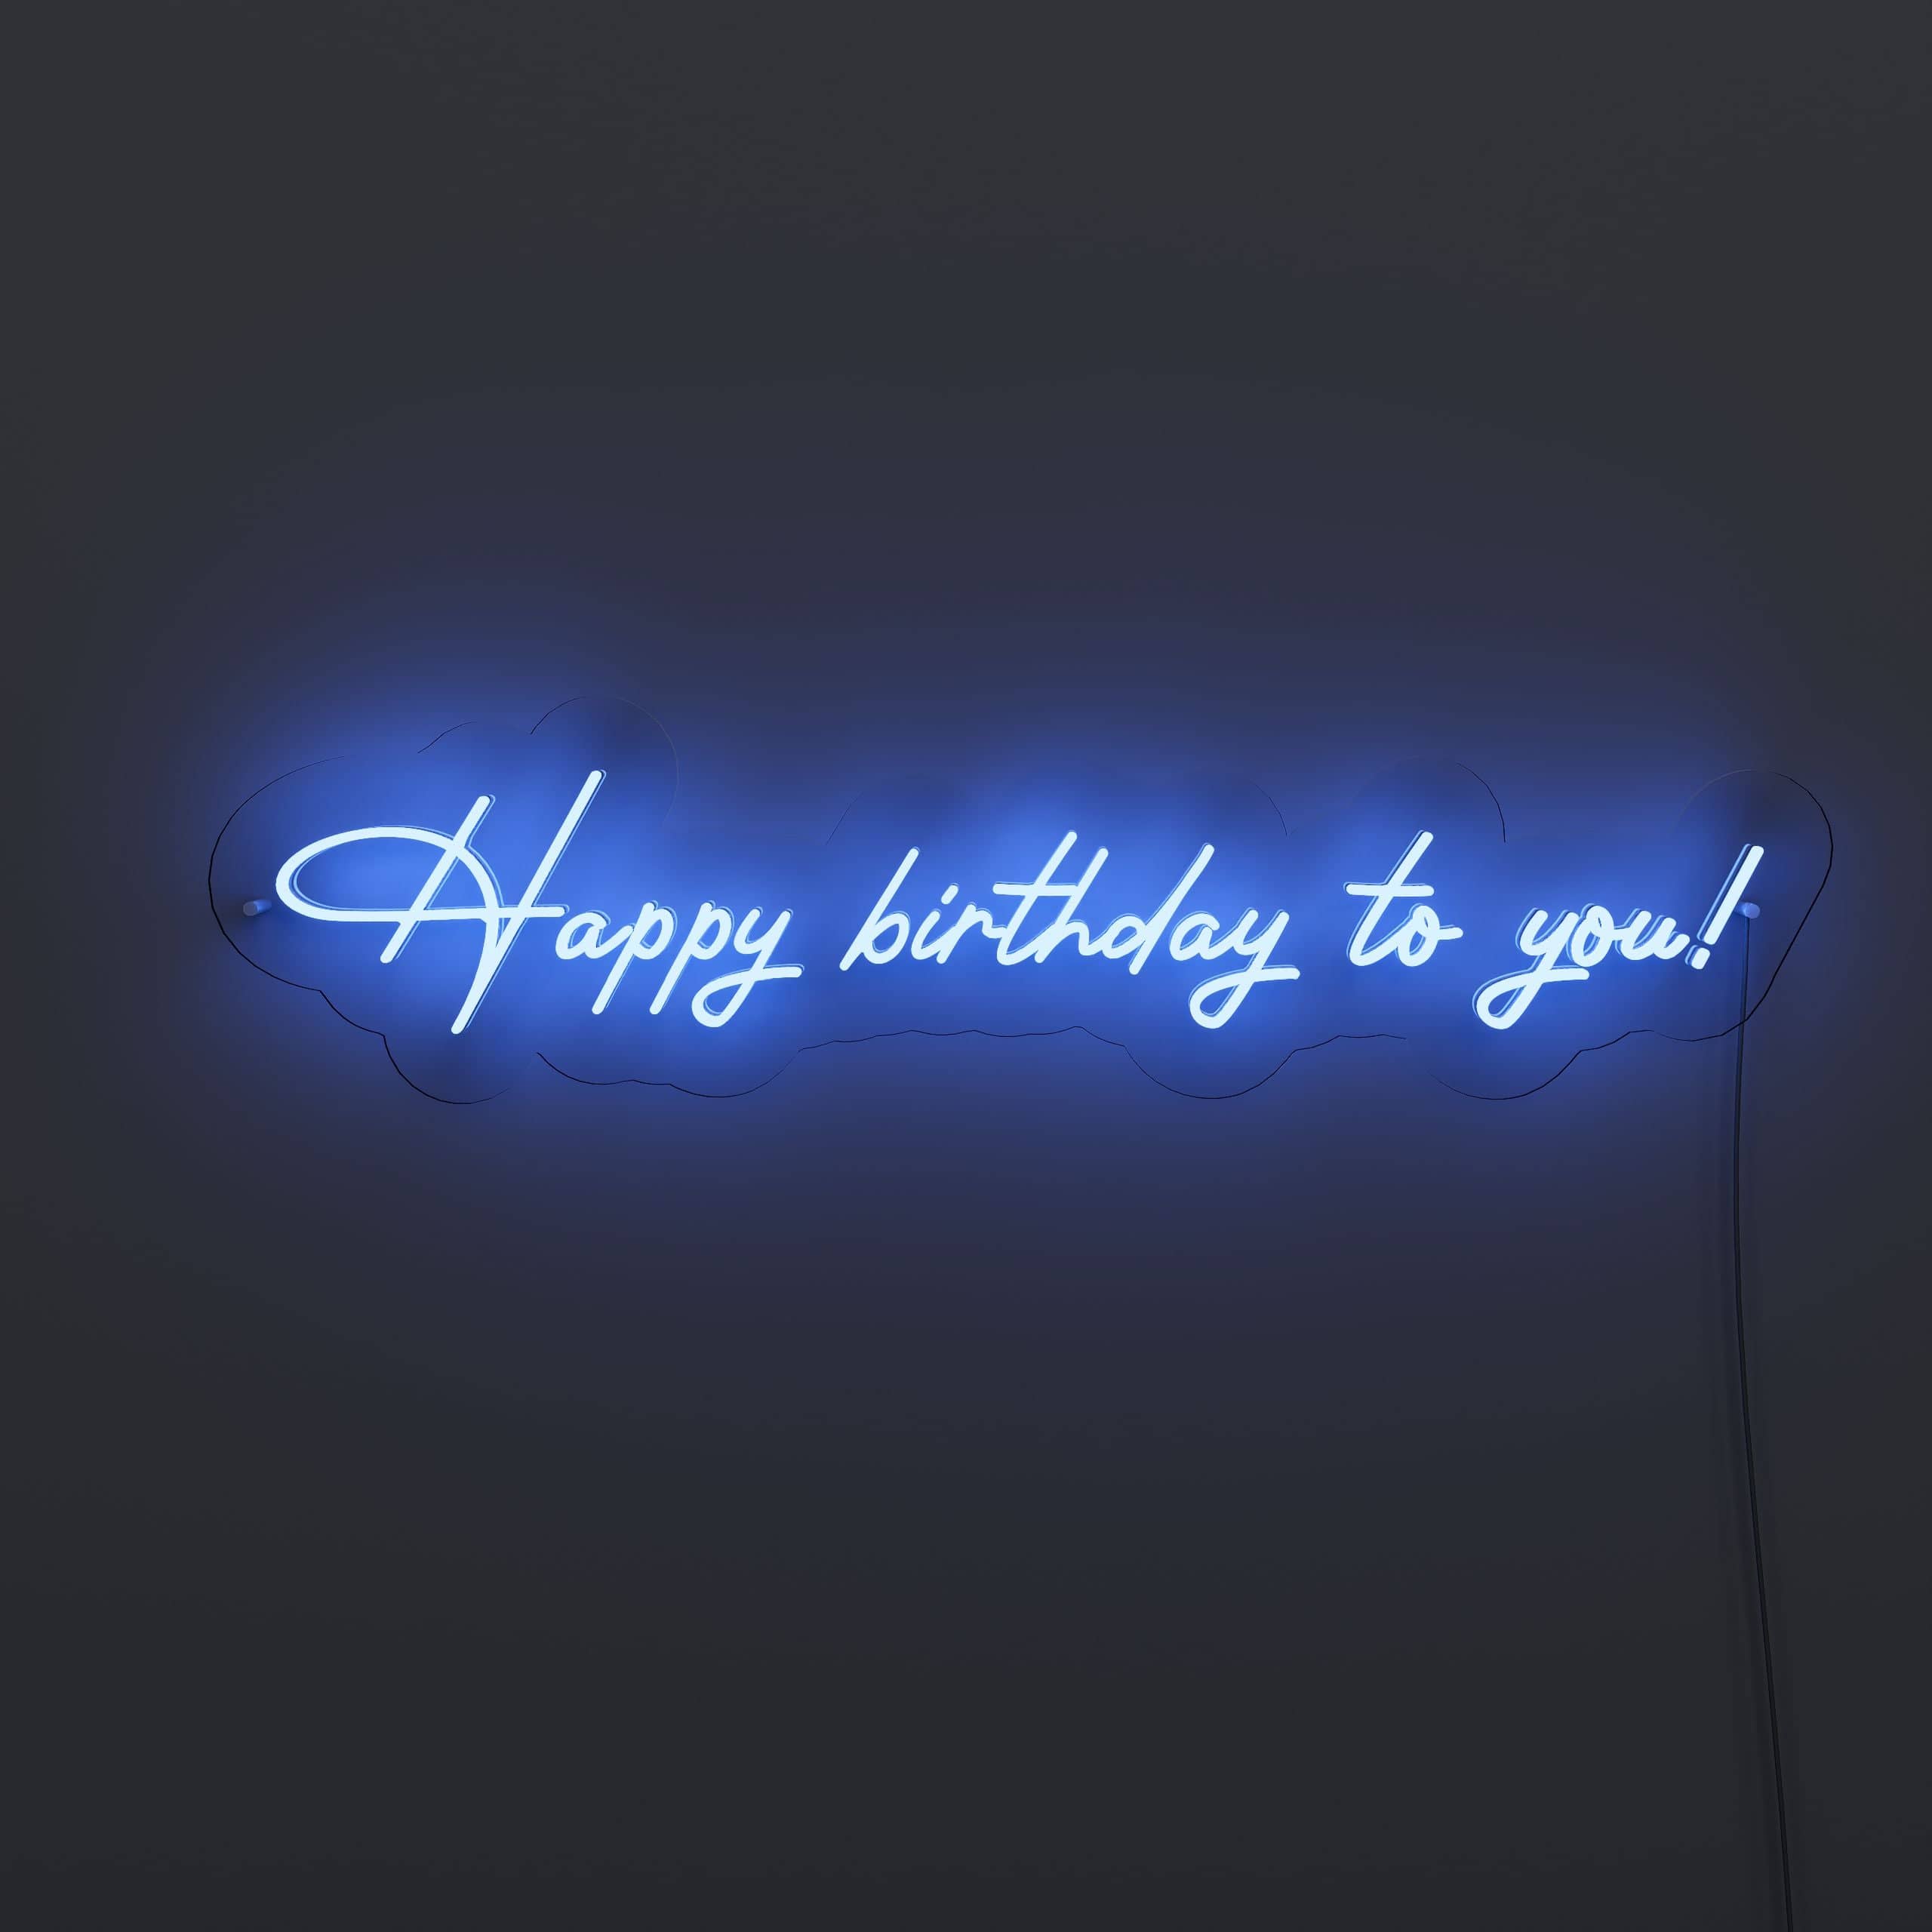 sending-you-warm-birthday-wishes!-neon-sign-lite